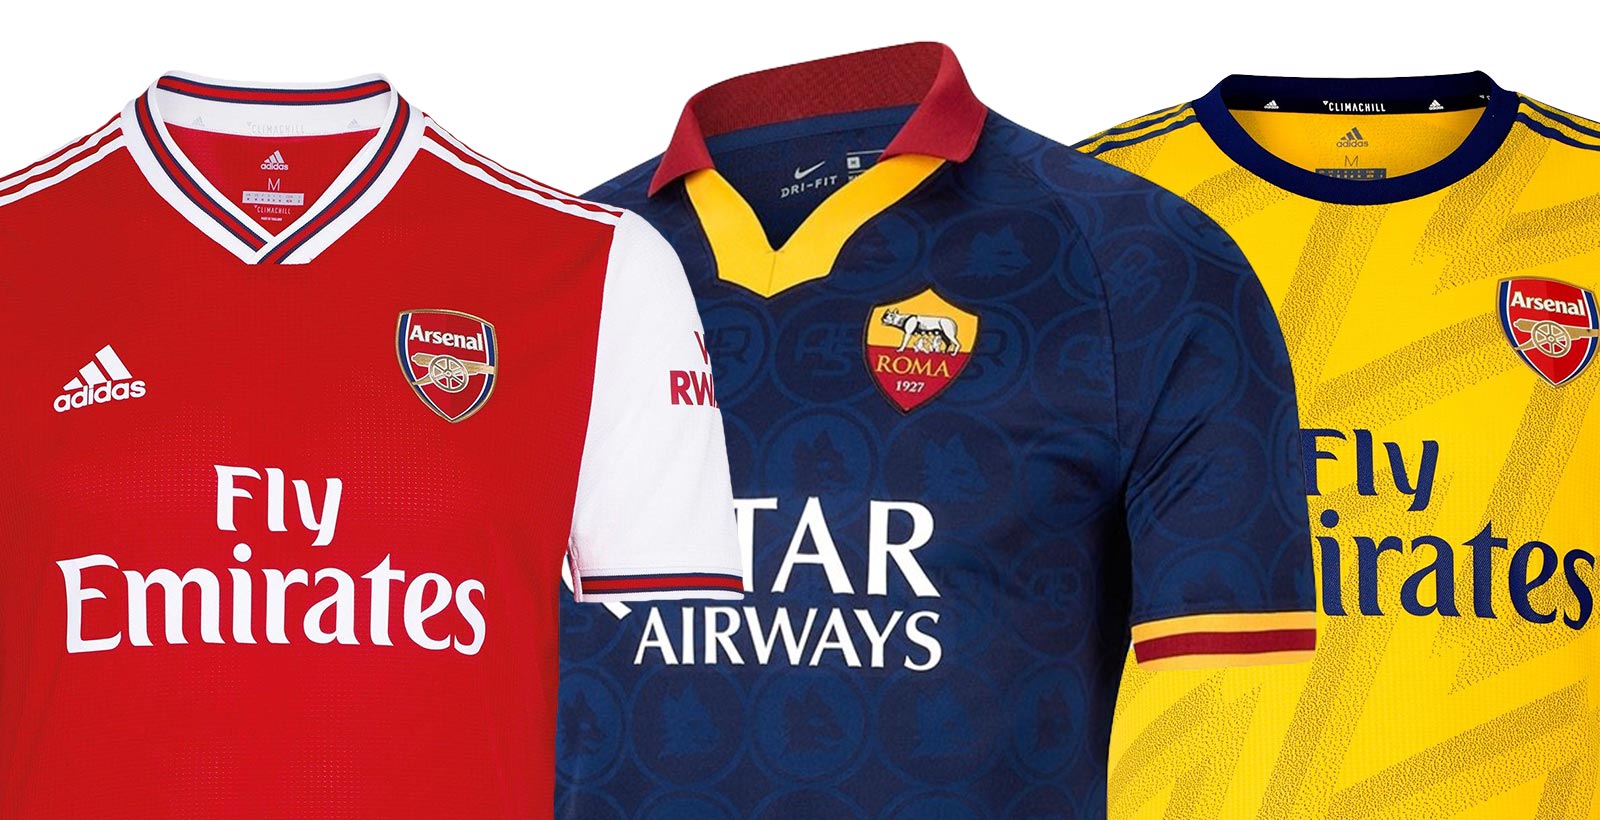 Adidas Arsenal 19-20 Away Kit Released - 'Bruised Banana' - Footy Headlines